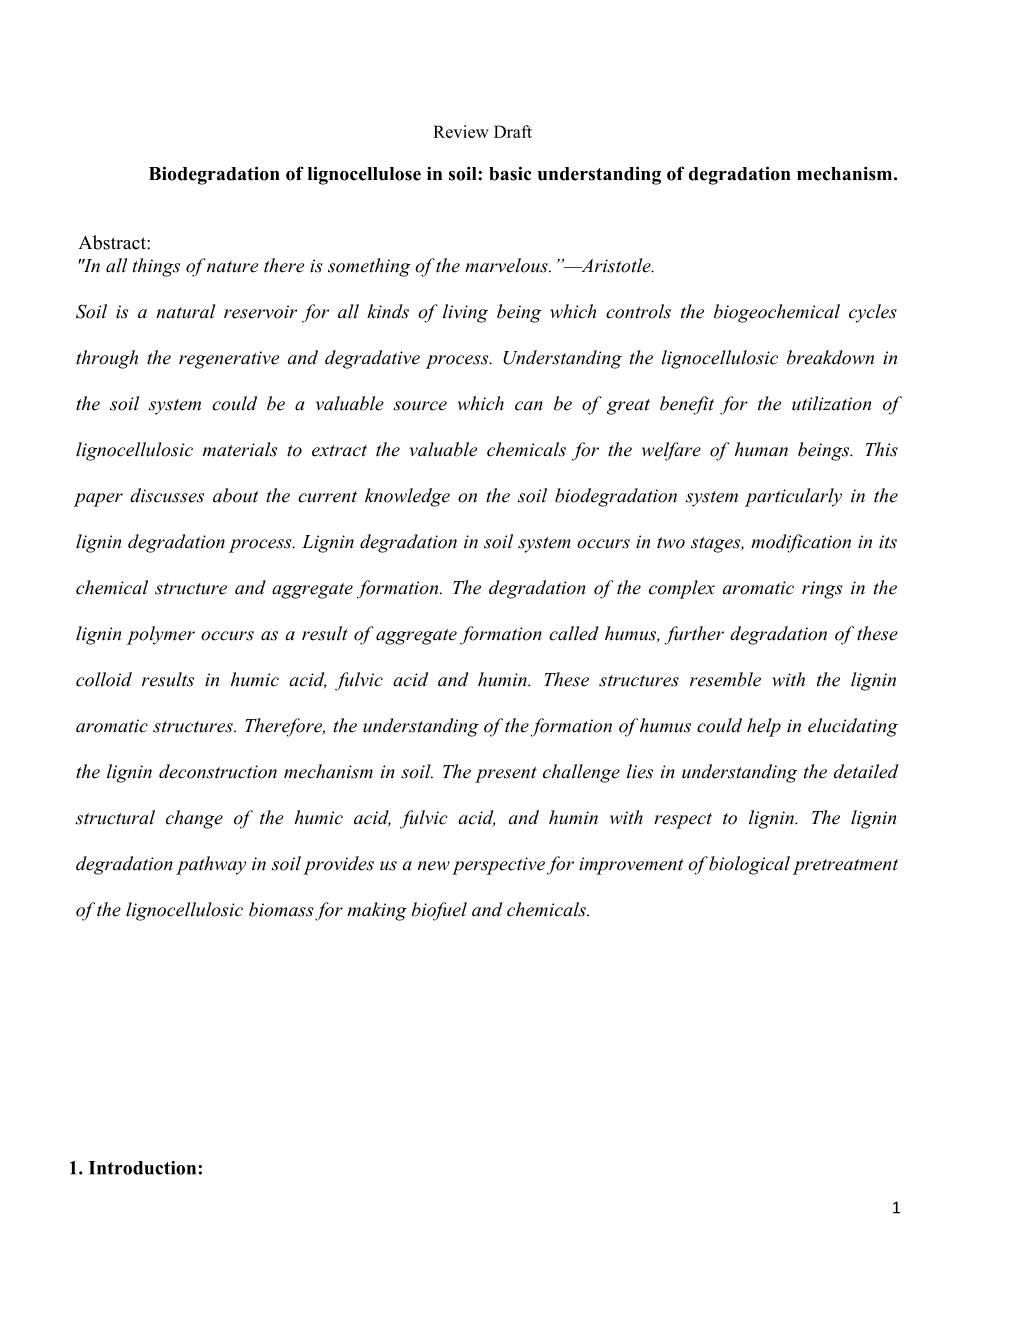 Biodegradation of Lignocellulose in Soil: Basic Understanding of Degradation Mechanism